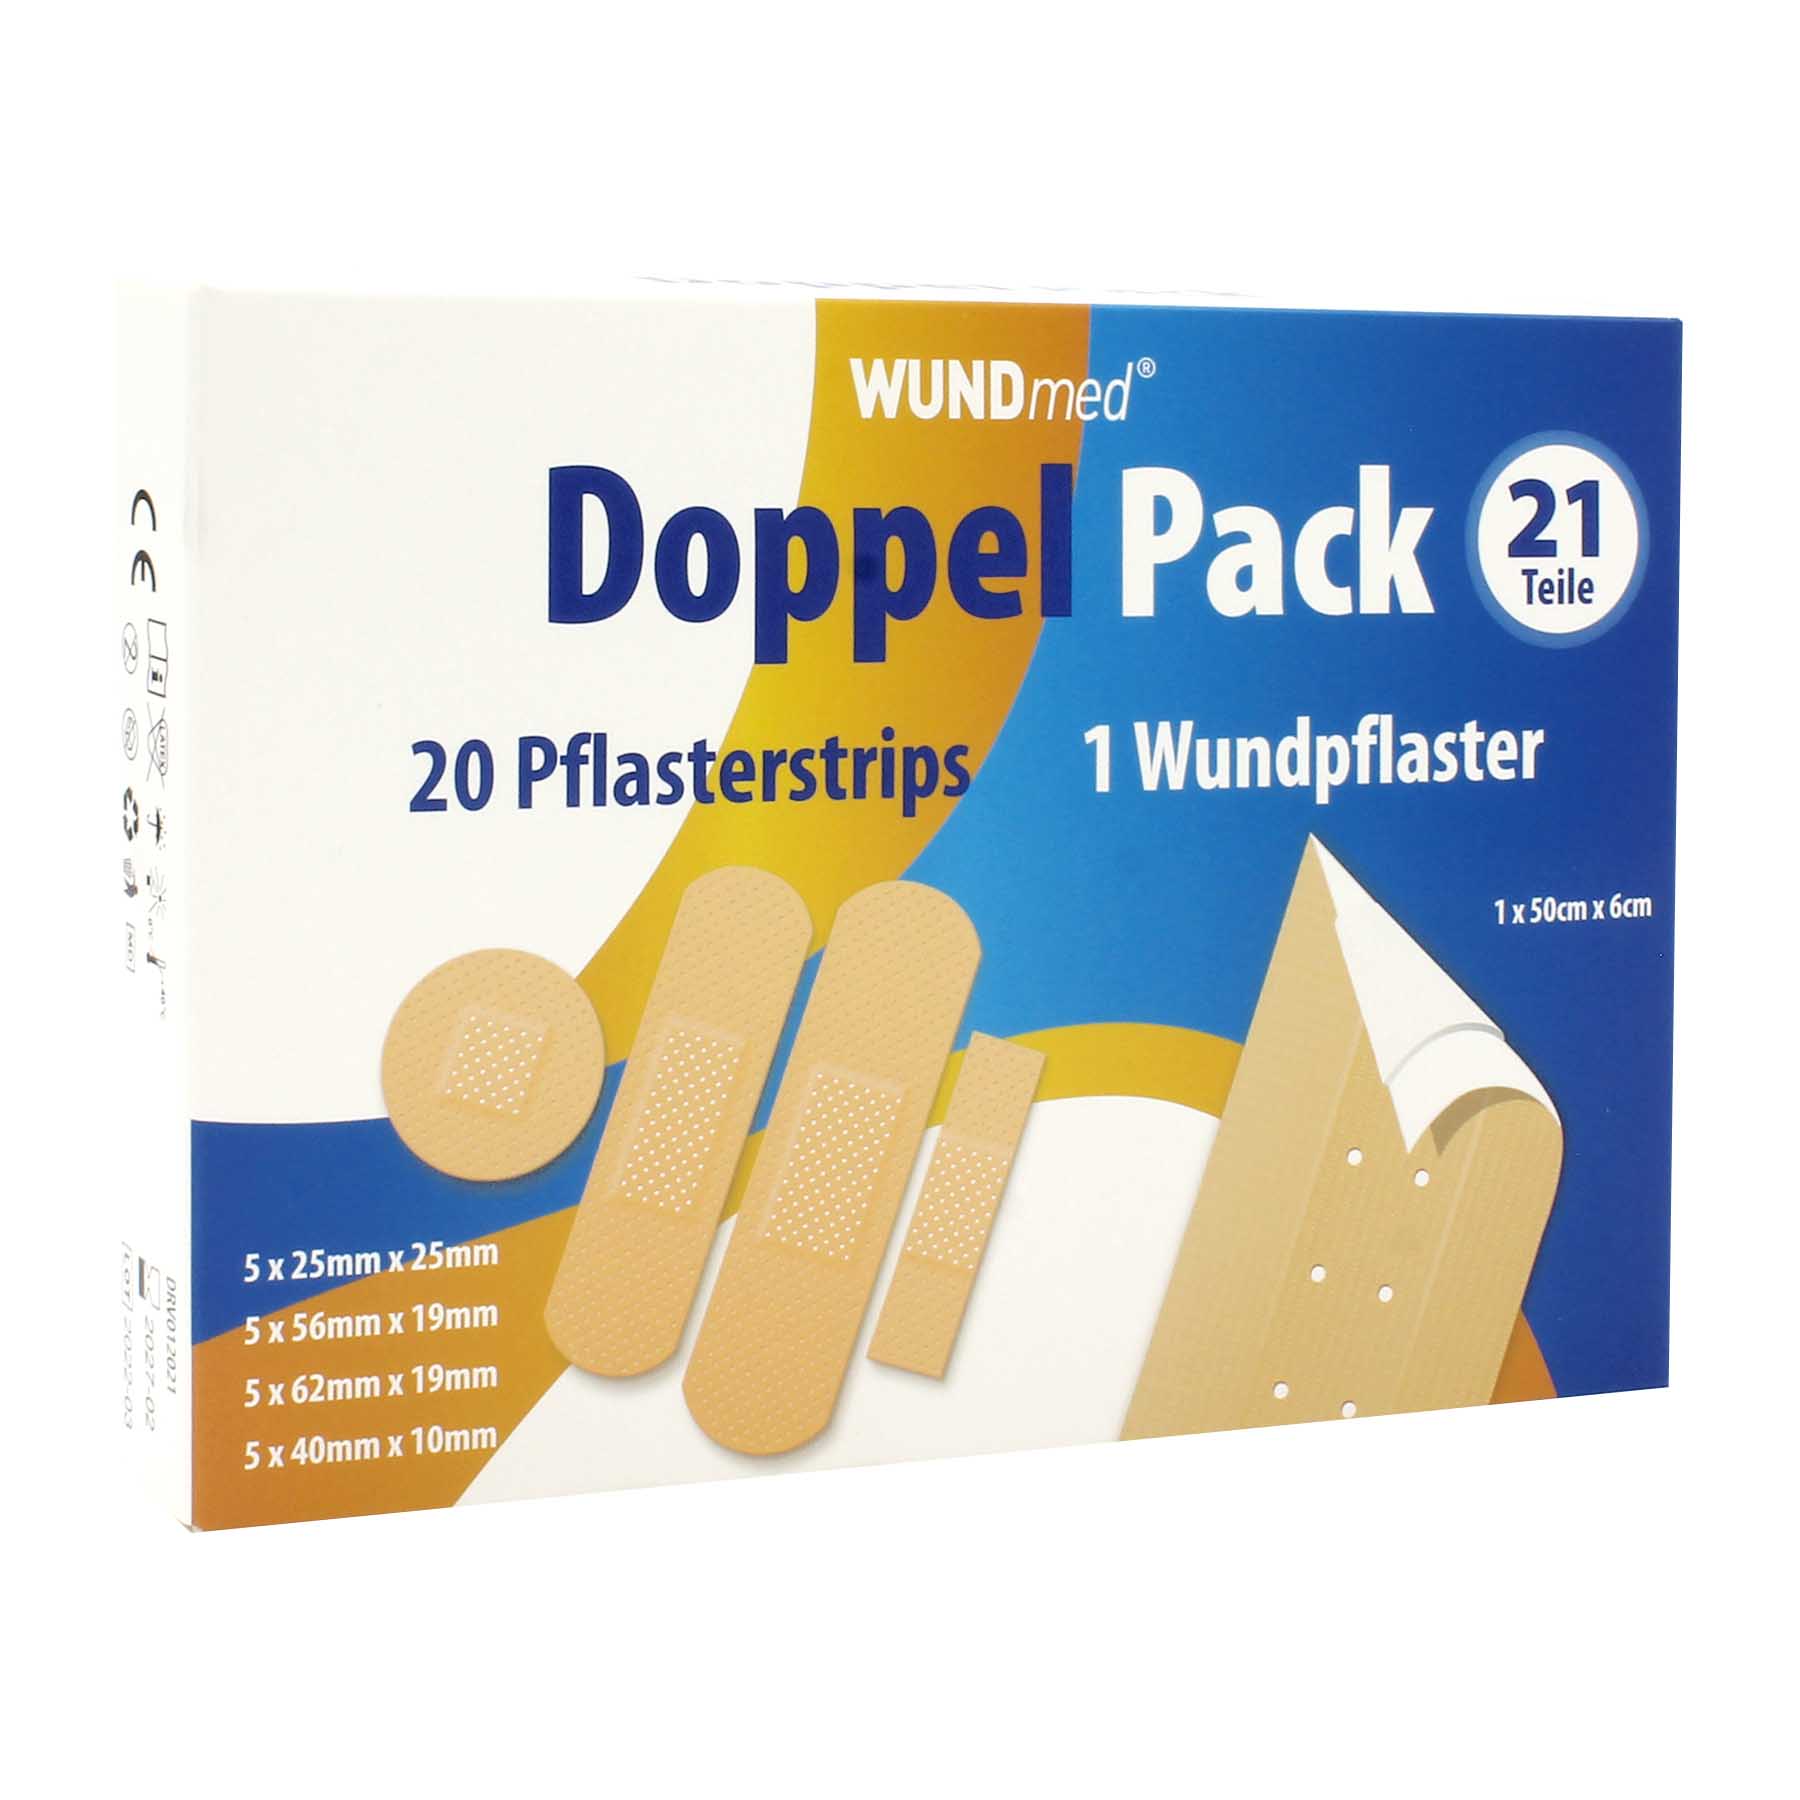 WUNDmed® Doppelpack 21-teilig Wundpflasterstreifen + Pflasterstrips